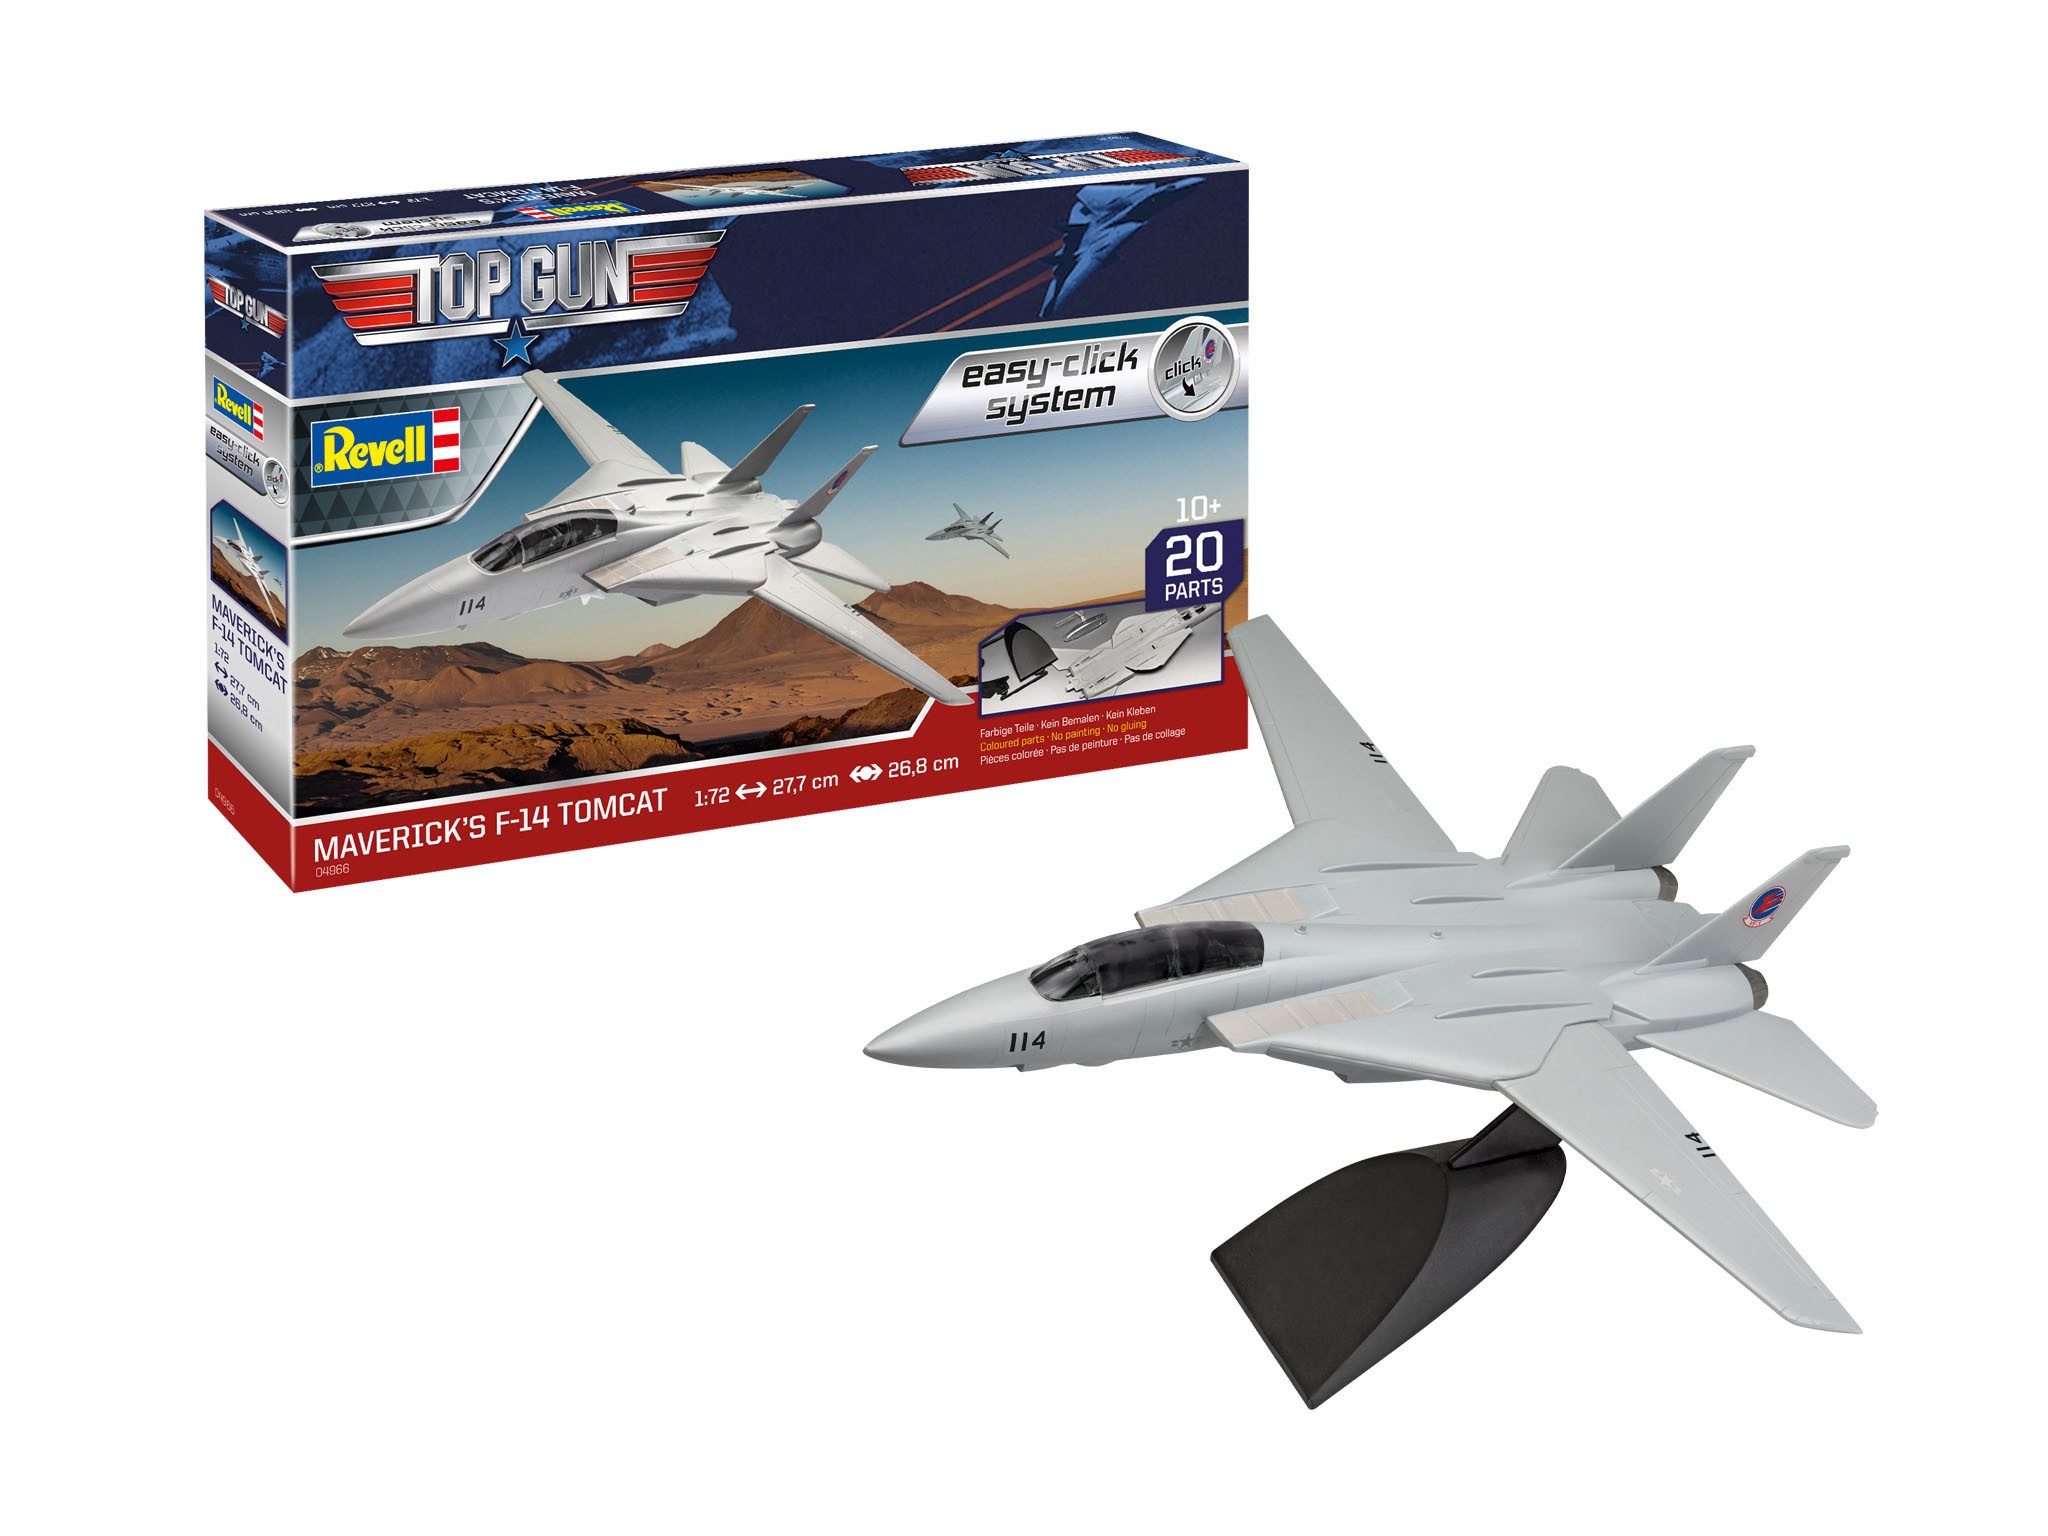 Revell 04966 Maverick's F-14 Tomcat ‘Top Gun’ 1:72  " Easy-Click "